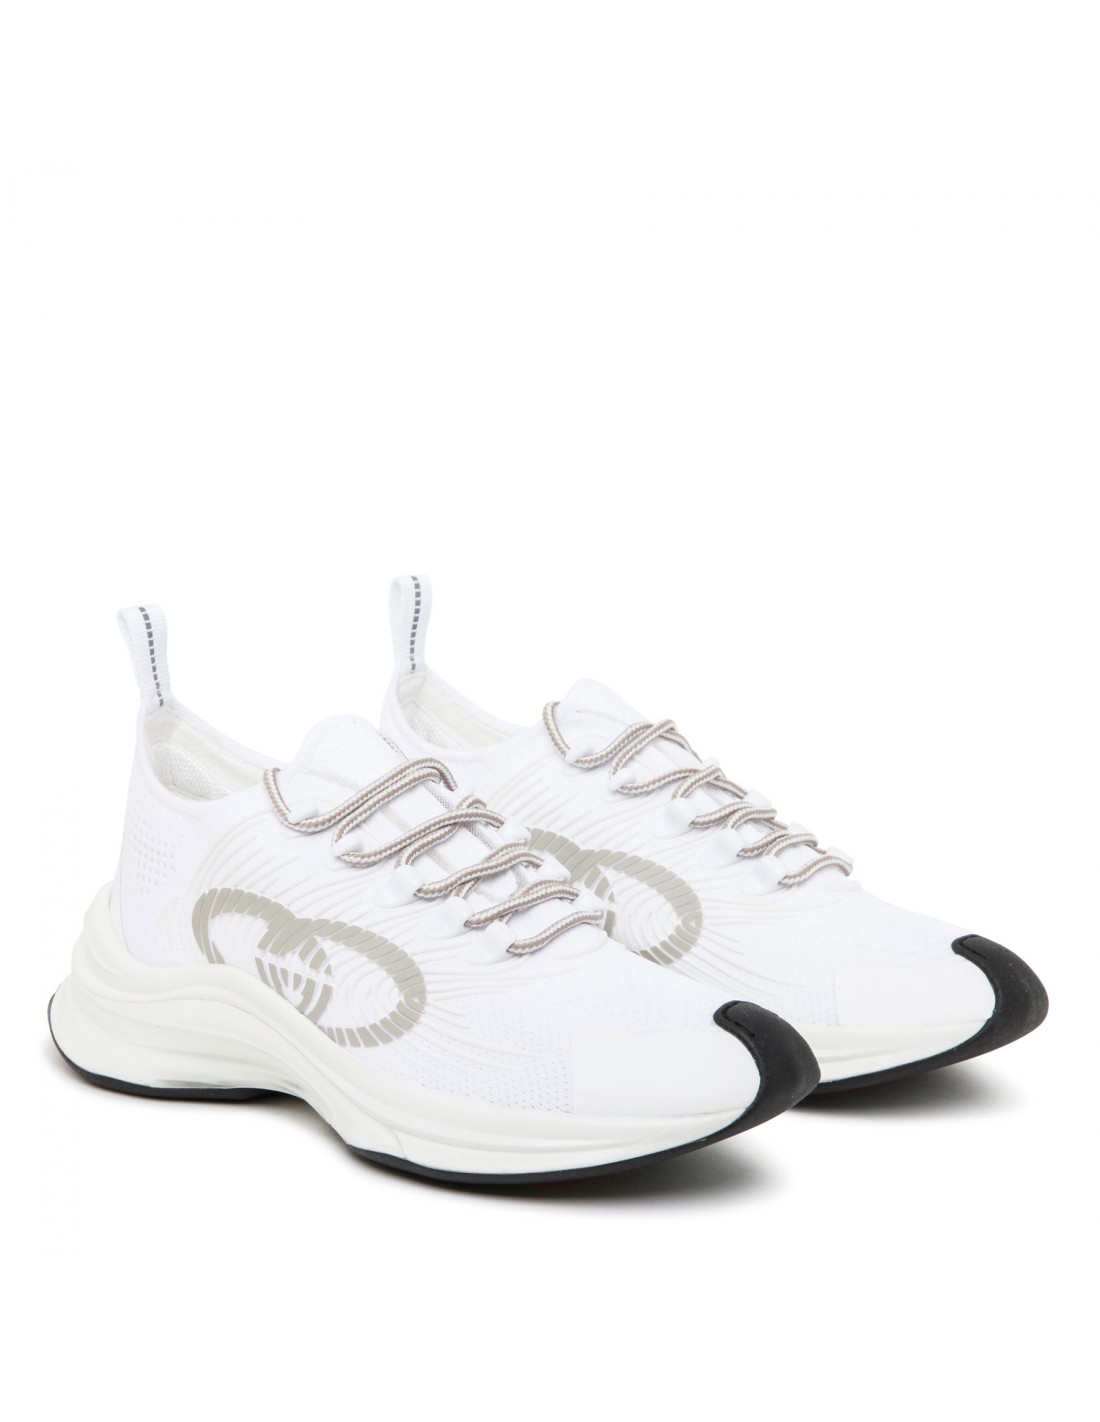 Run white sneakers